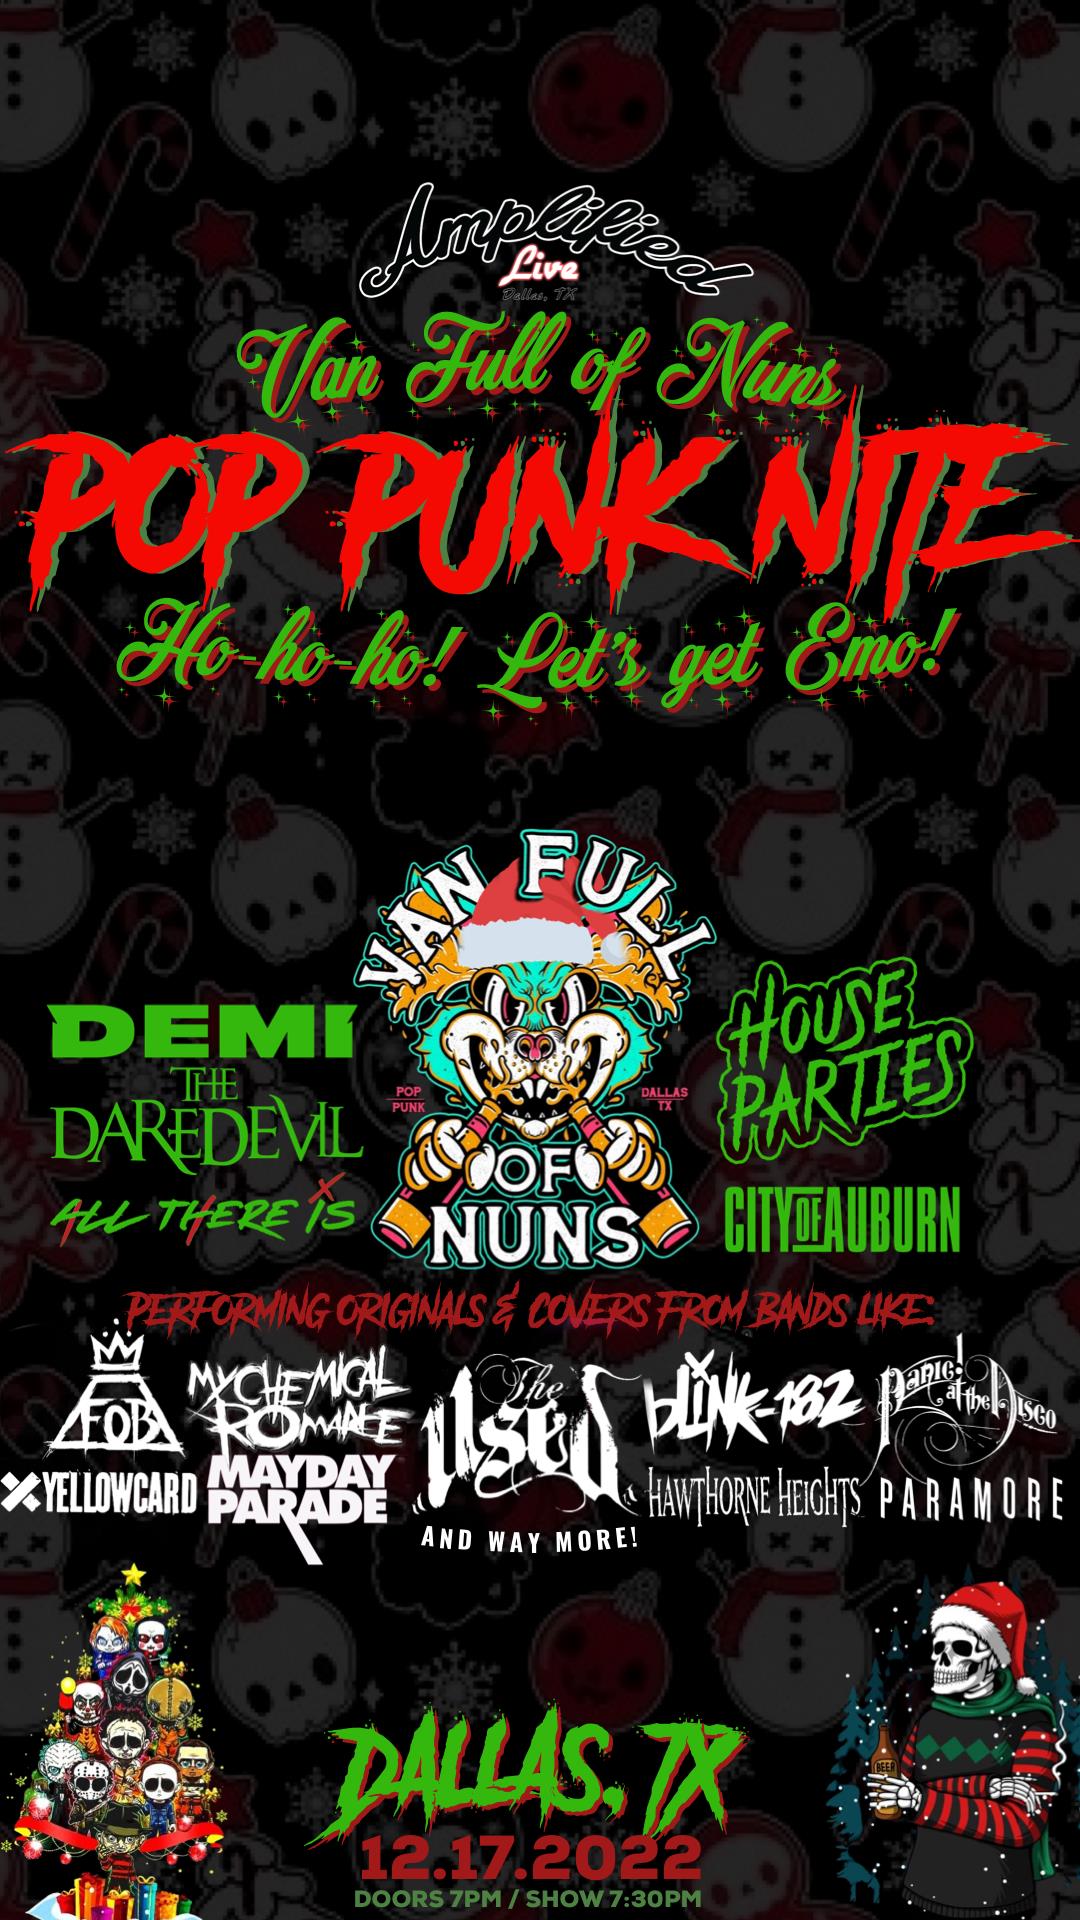 Van Full of Nuns Pop Punk Nite: Hohoho Lets Get Emo!